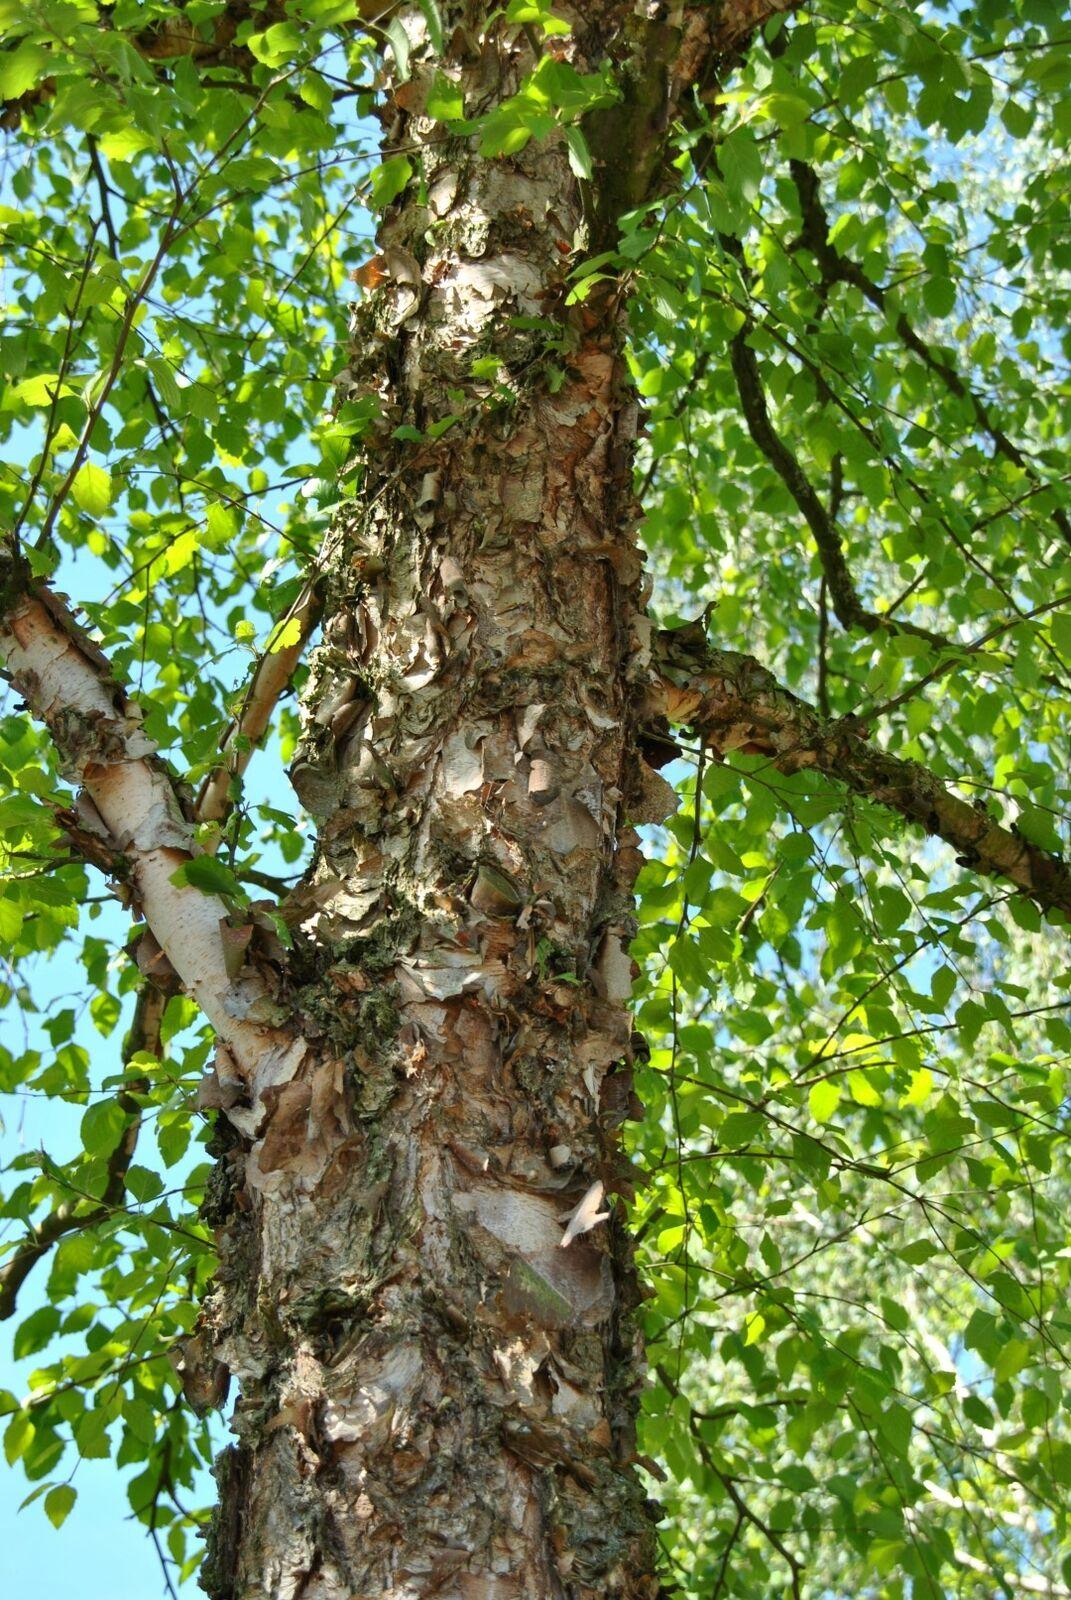 River Birch Single Stem Tree - 12-18" Tall Live Plant - Quart Pot - Betula nigra - The Nursery Center